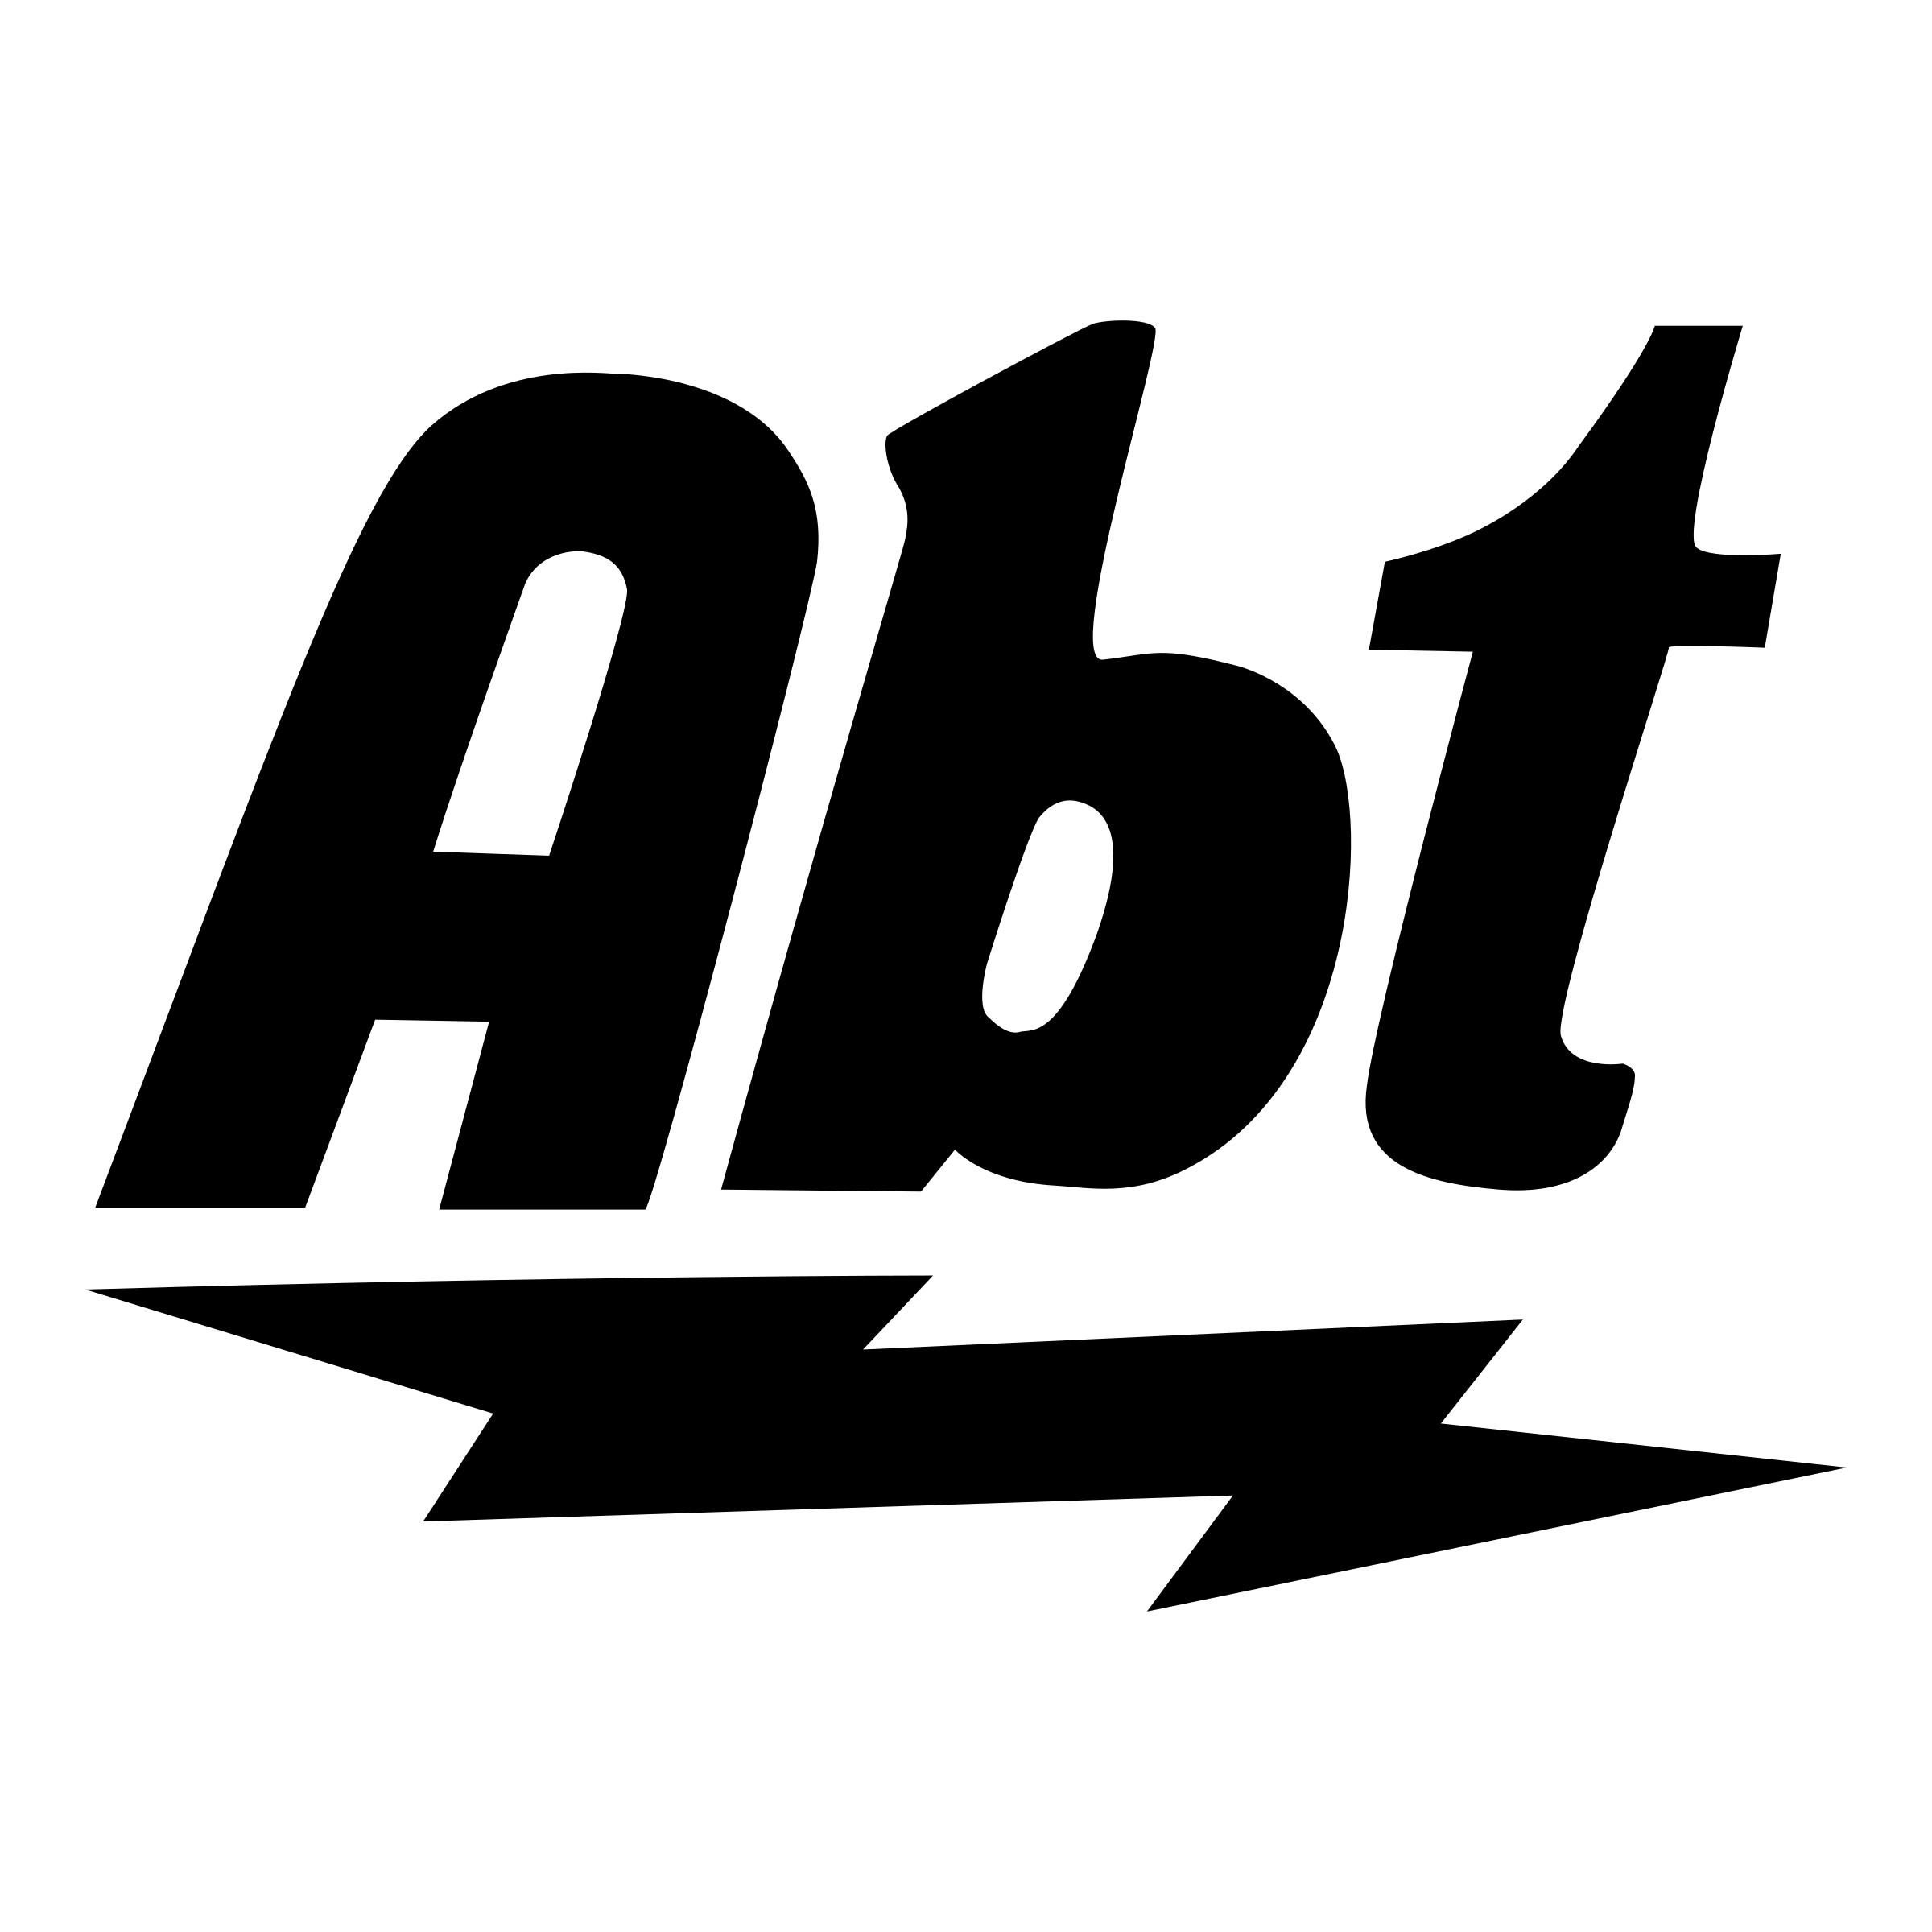 Abt Logo - Abt Logo PNG Transparent & SVG Vector - Freebie Supply